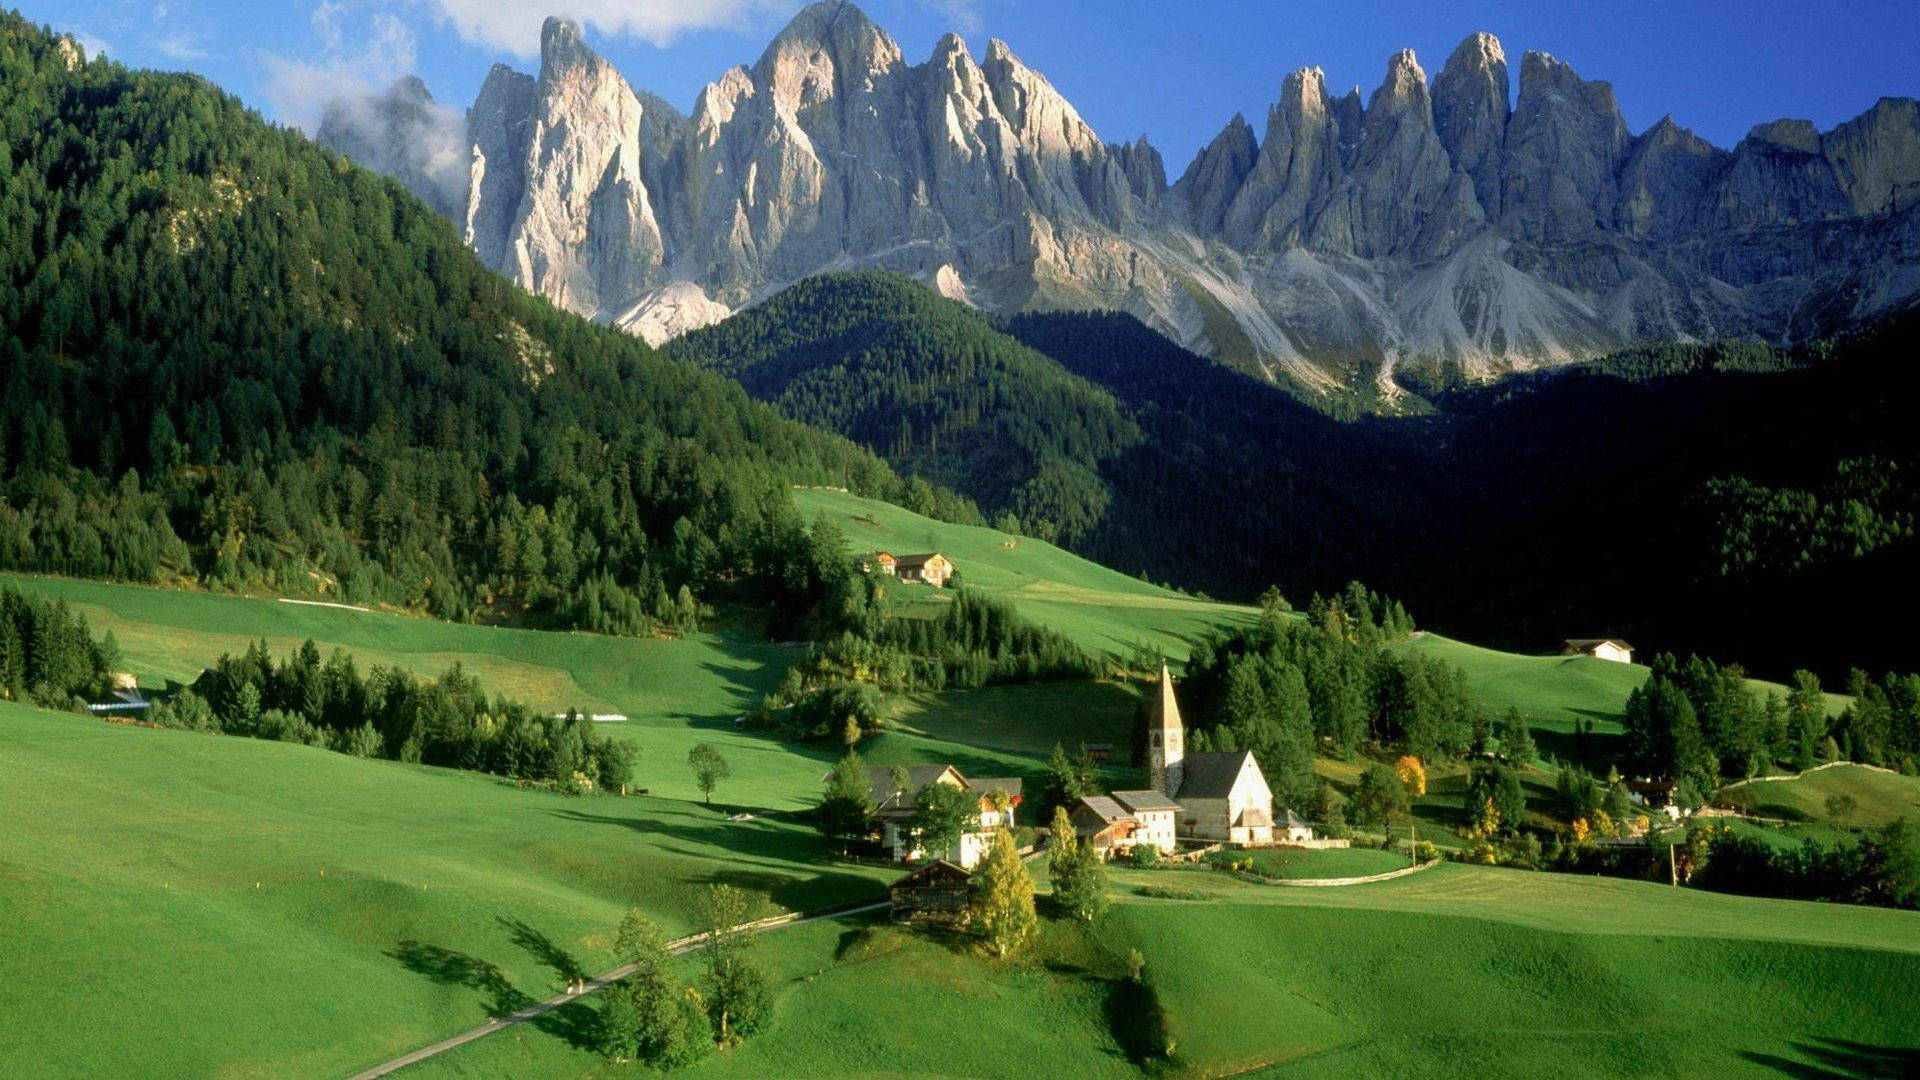 Europe's Picturesque Mountain Range Background